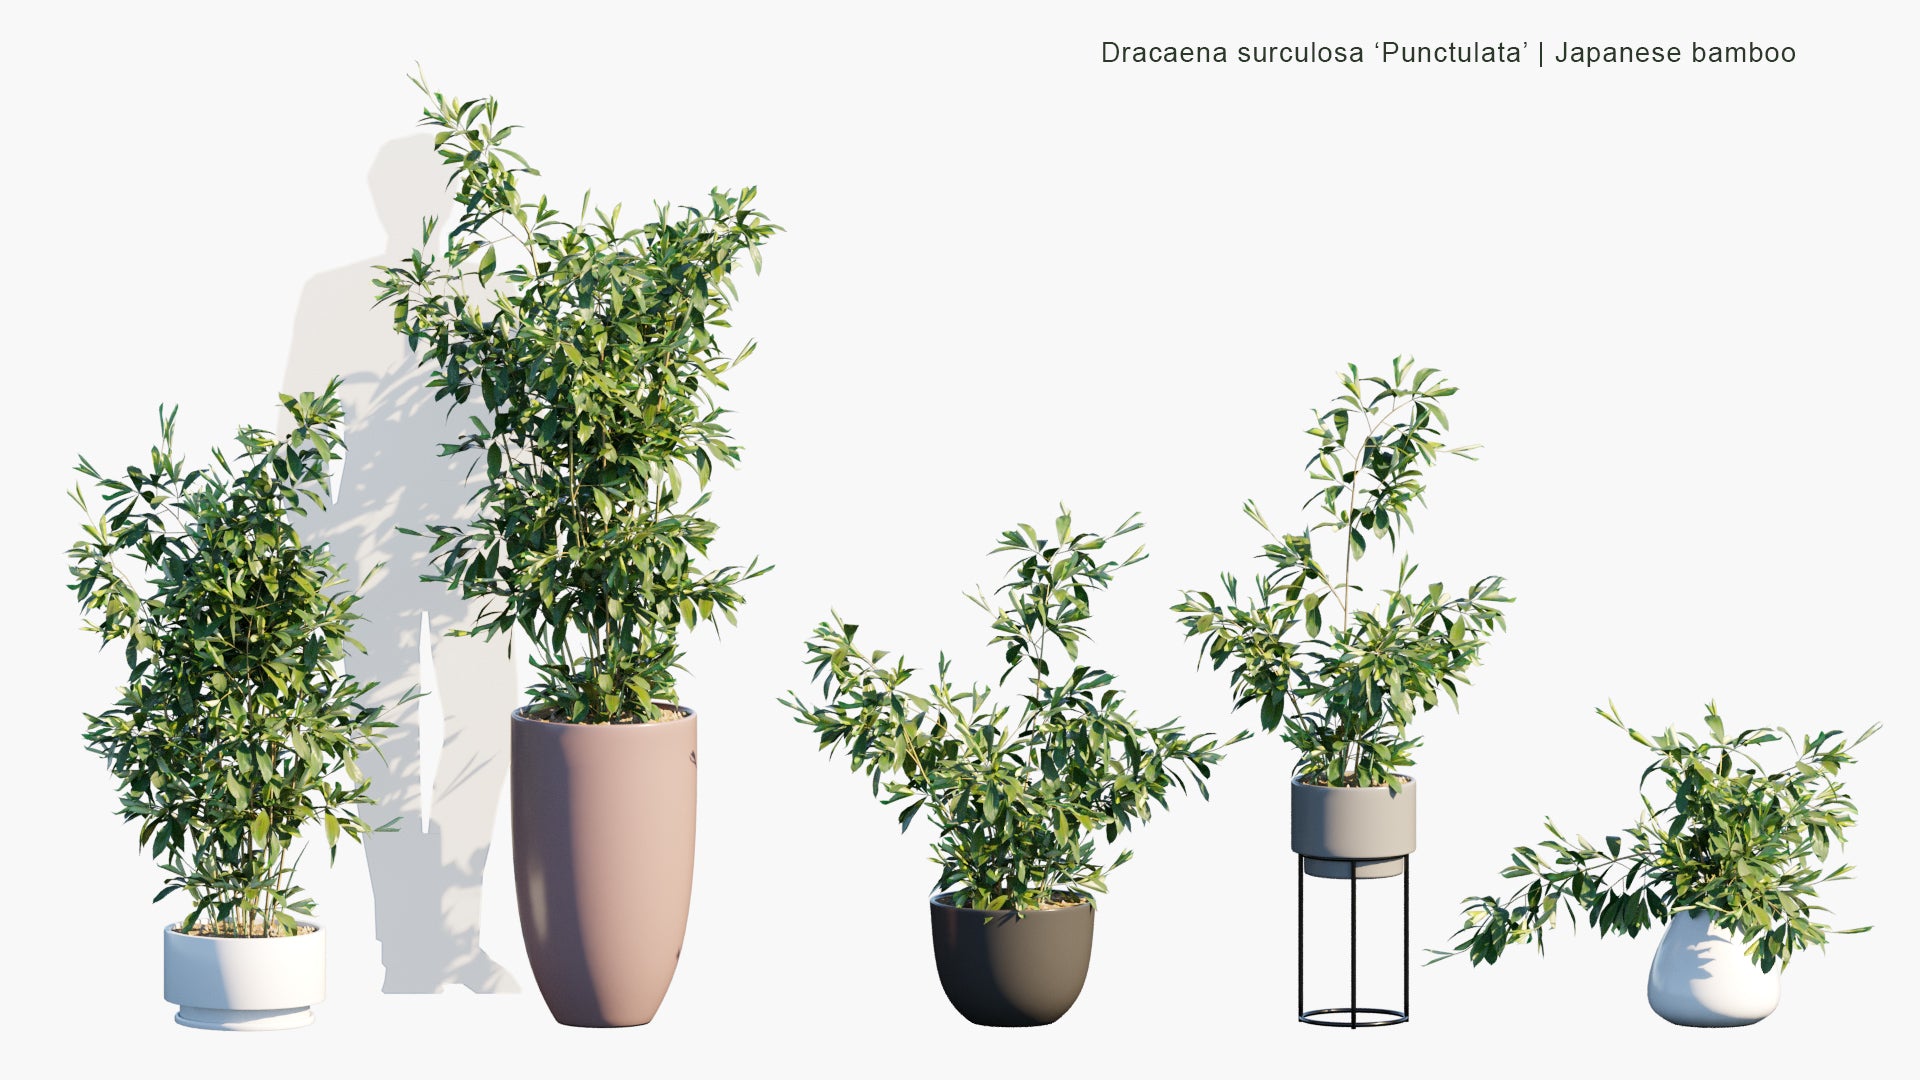 Low Poly Dracaena Surculosa 'Punctulata' - Florida Beauty, Gold Dust, Gold Dust Dracaena, Spotted Dracaena, Japanese Bamboo (3D Model)